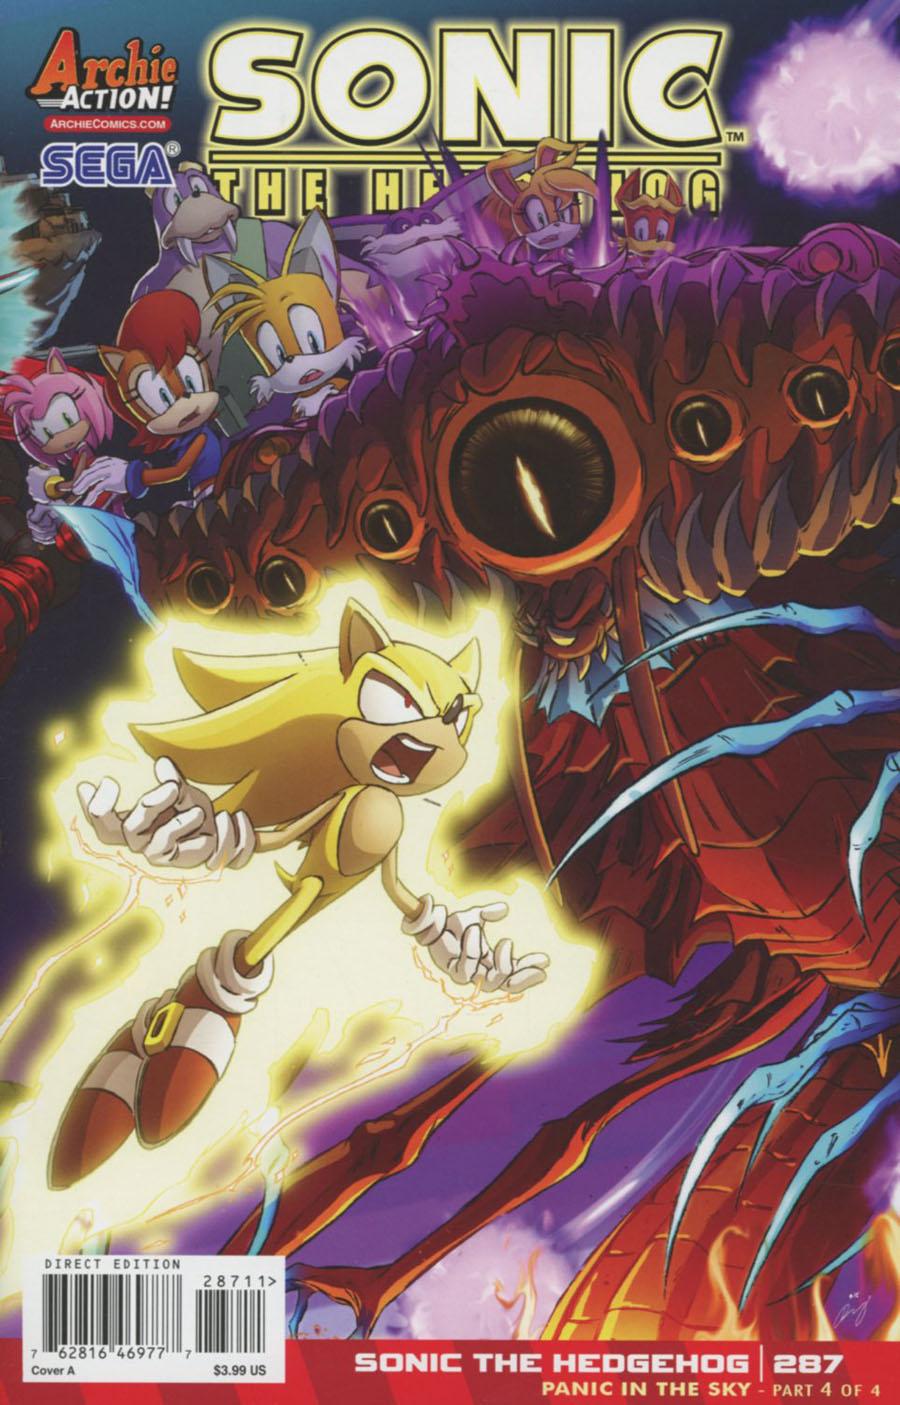 Sonic the Hedgehog Vol. 2 #287